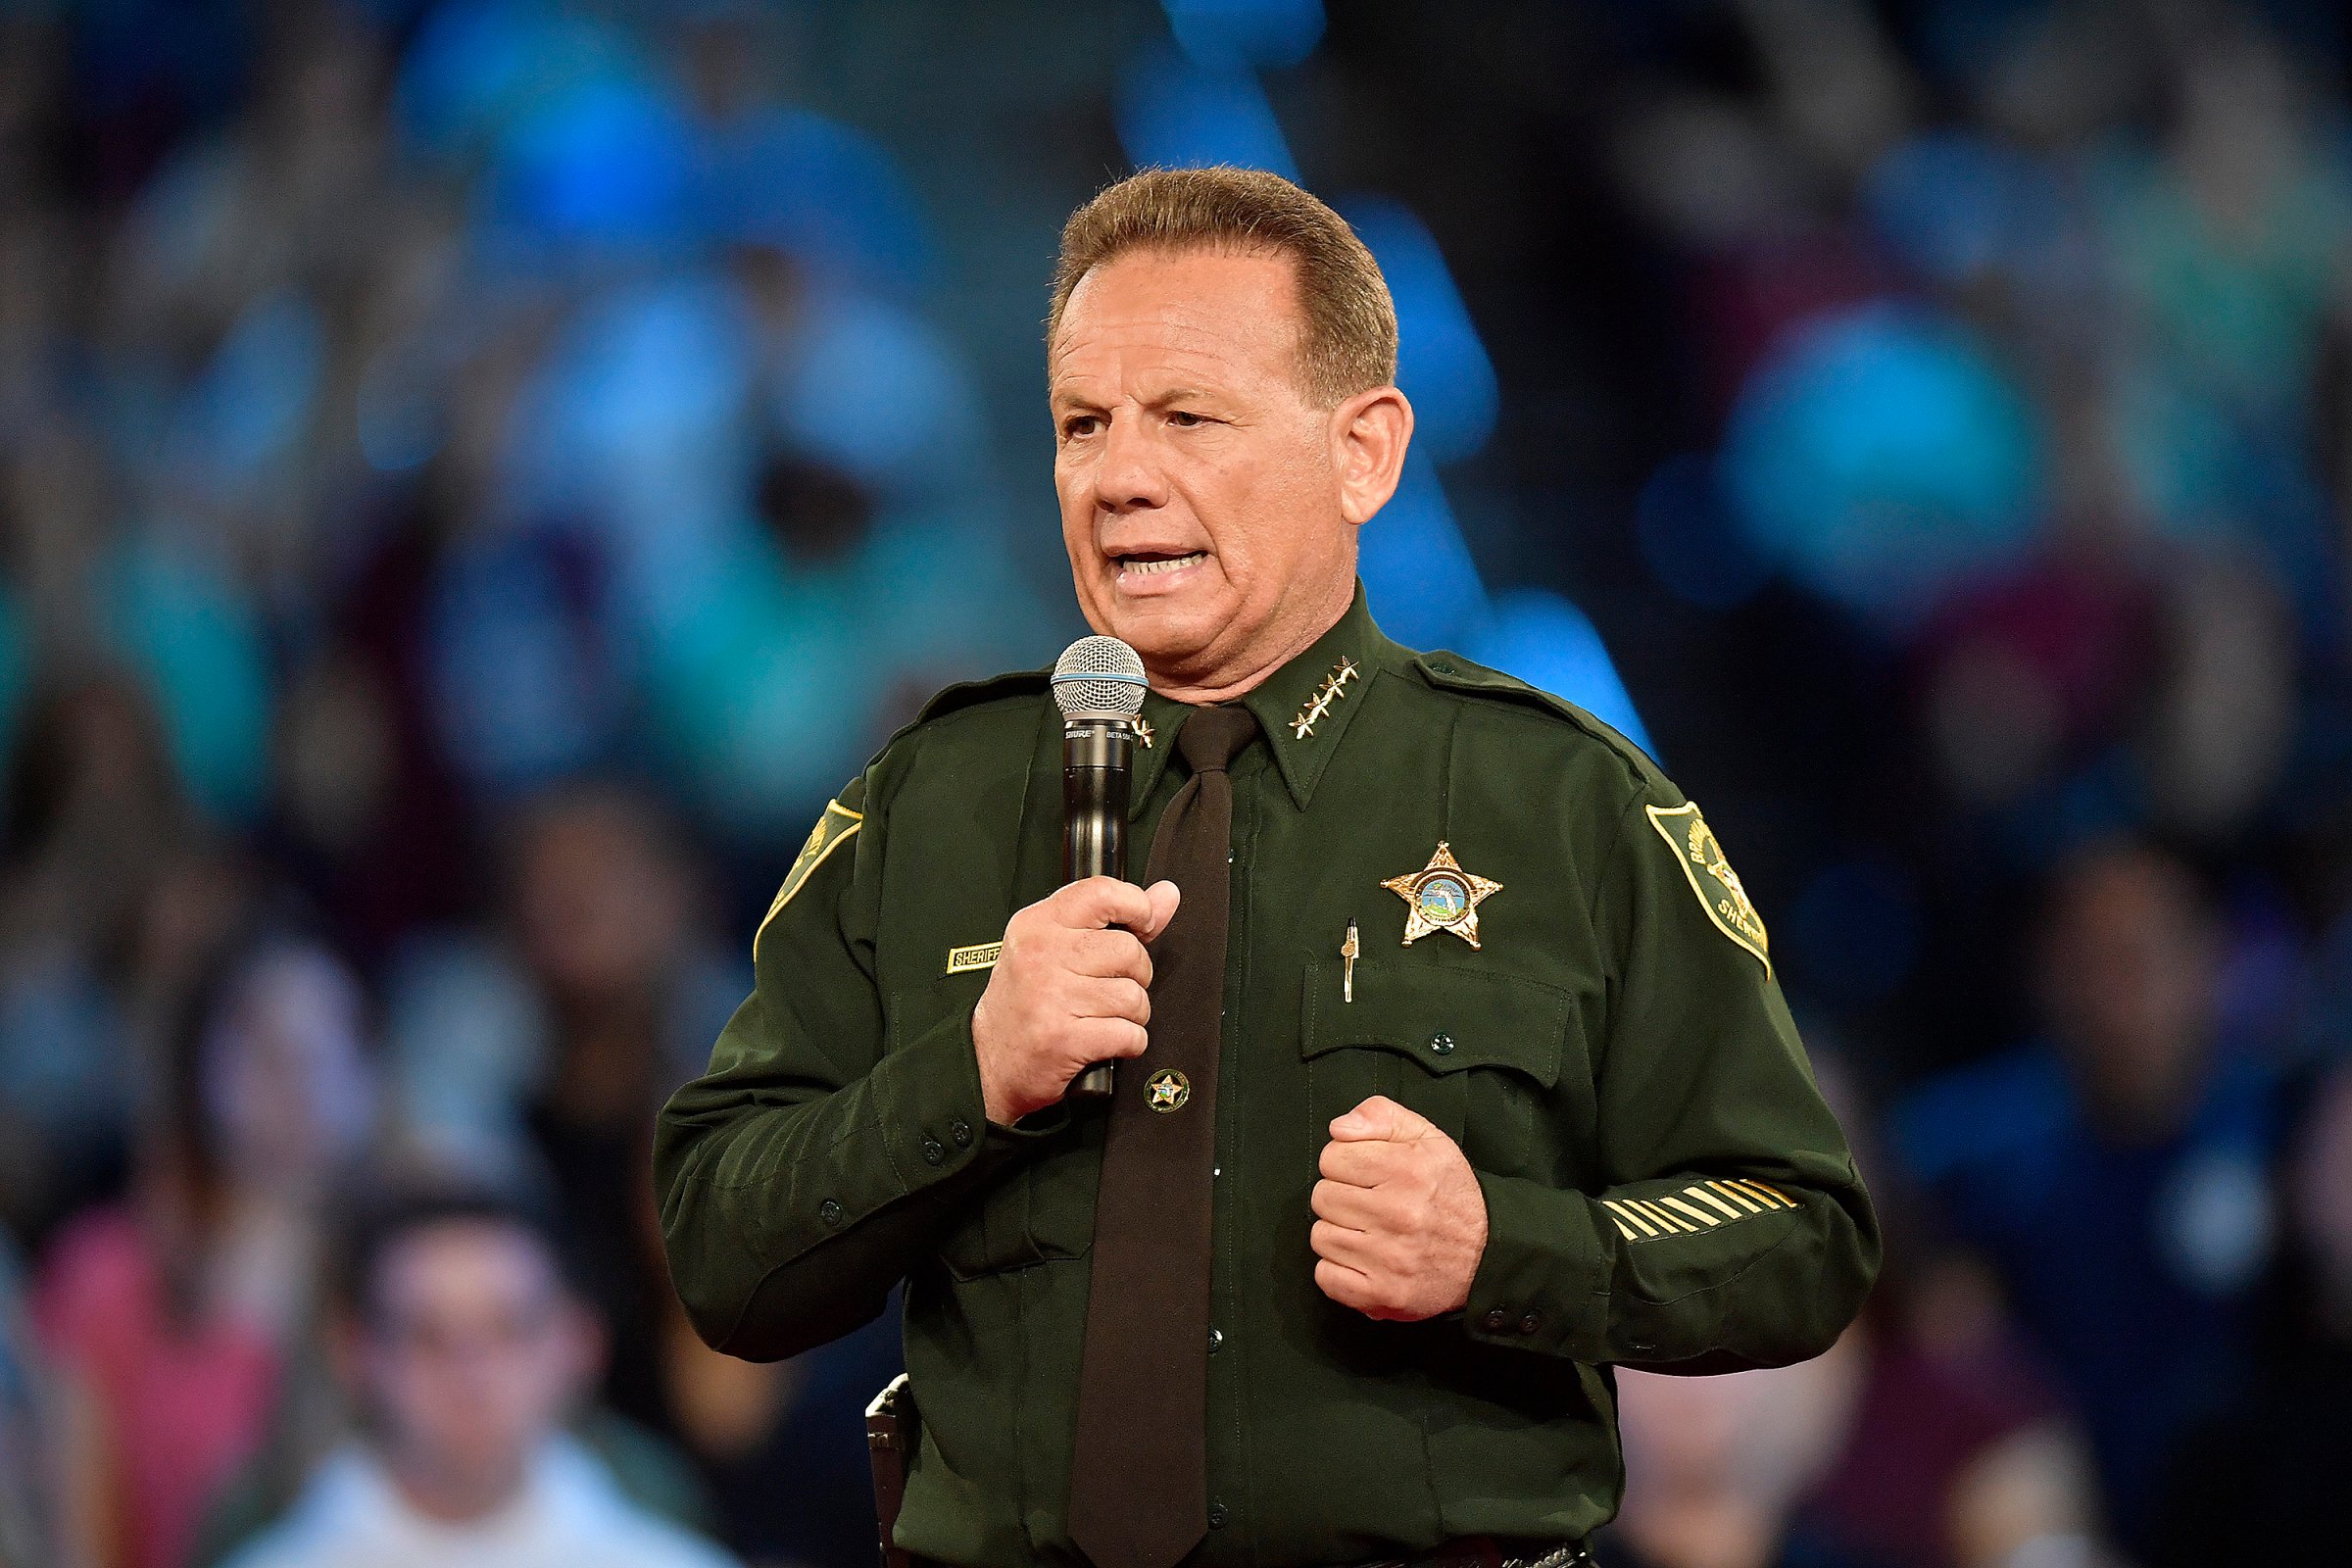 Republicans urge Florida governor to suspend Broward sheriff